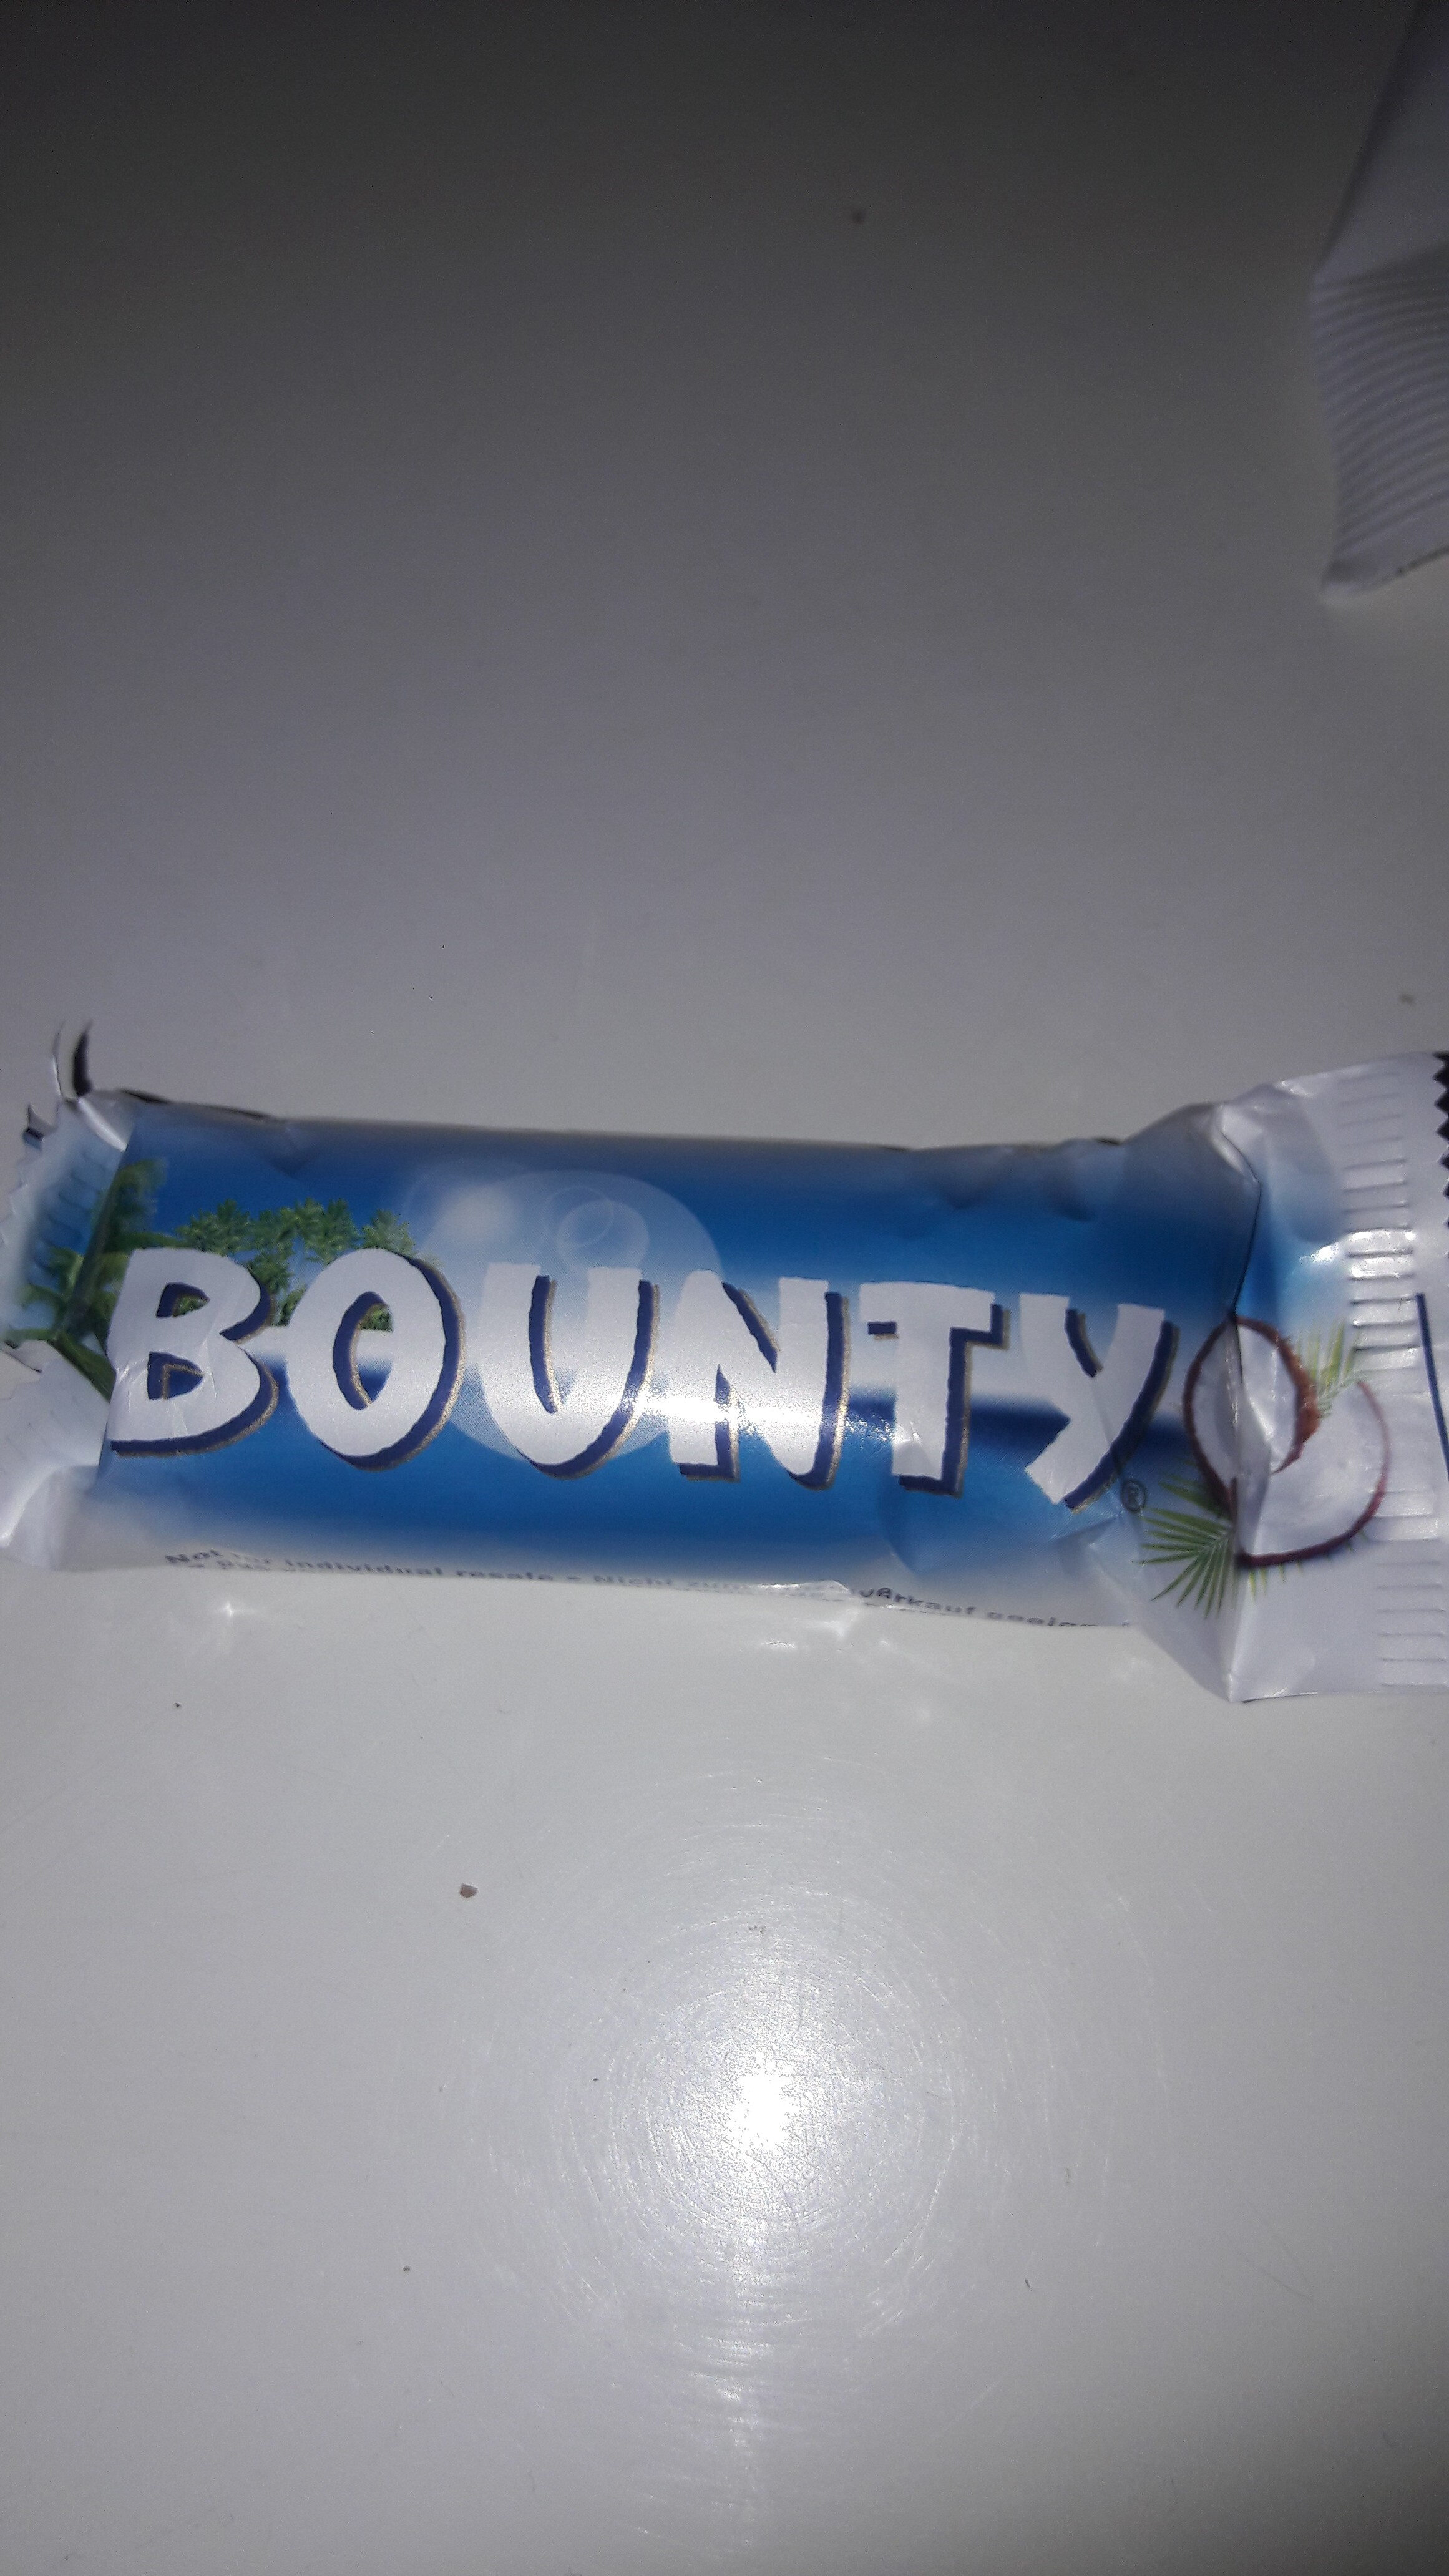 Bounty - Product - fr